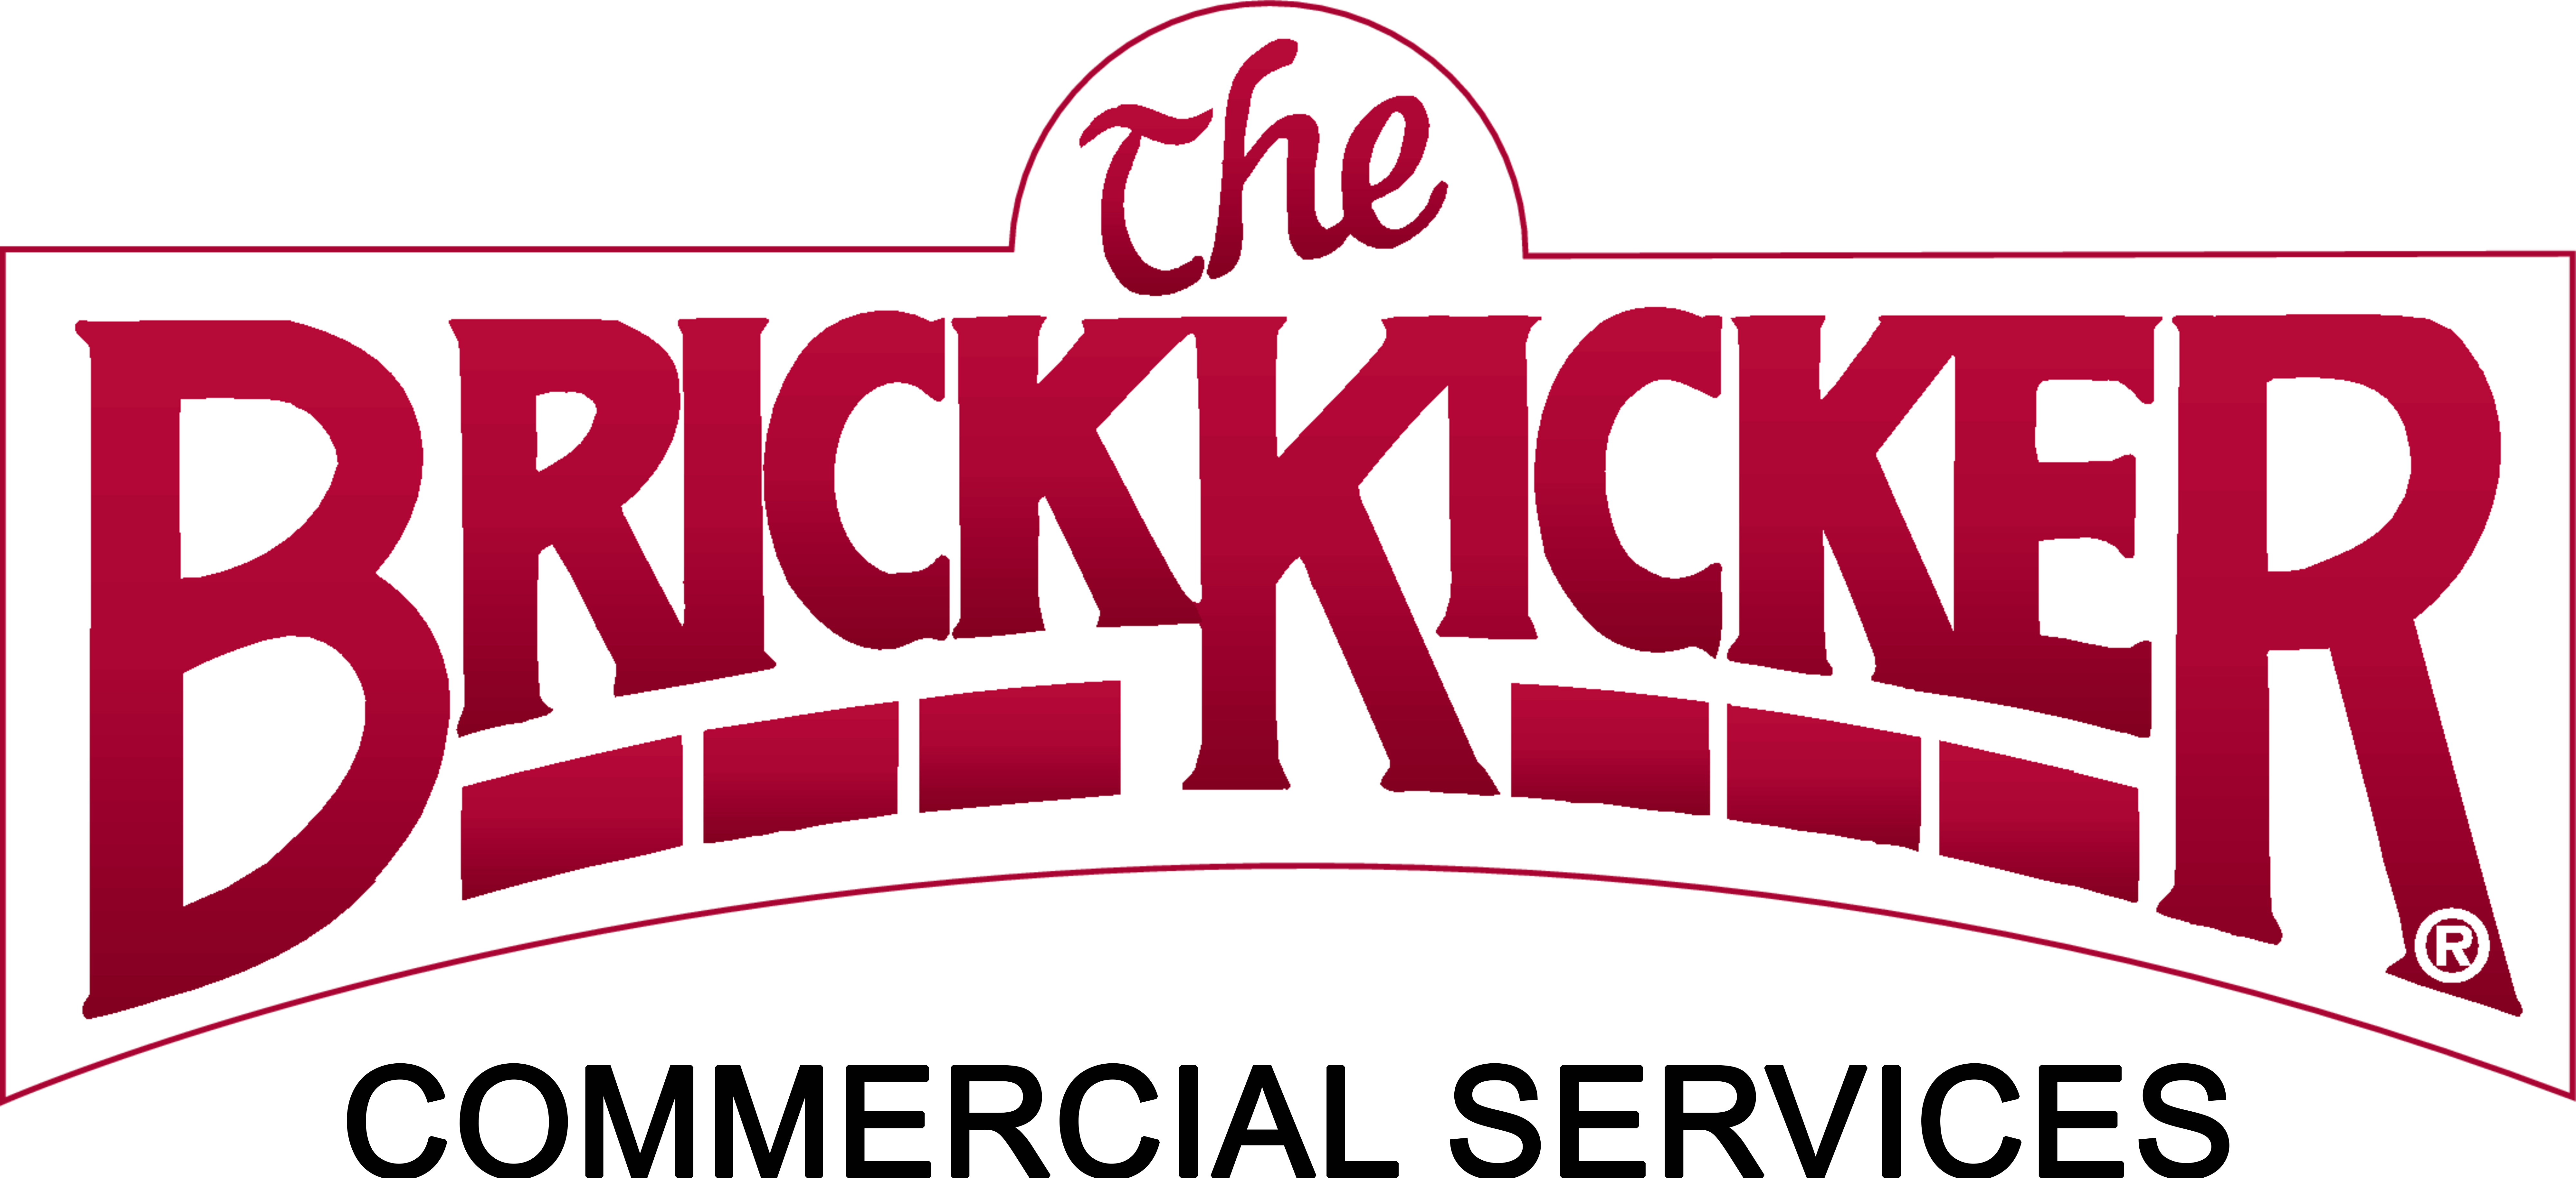 The BrickKicker Commercial